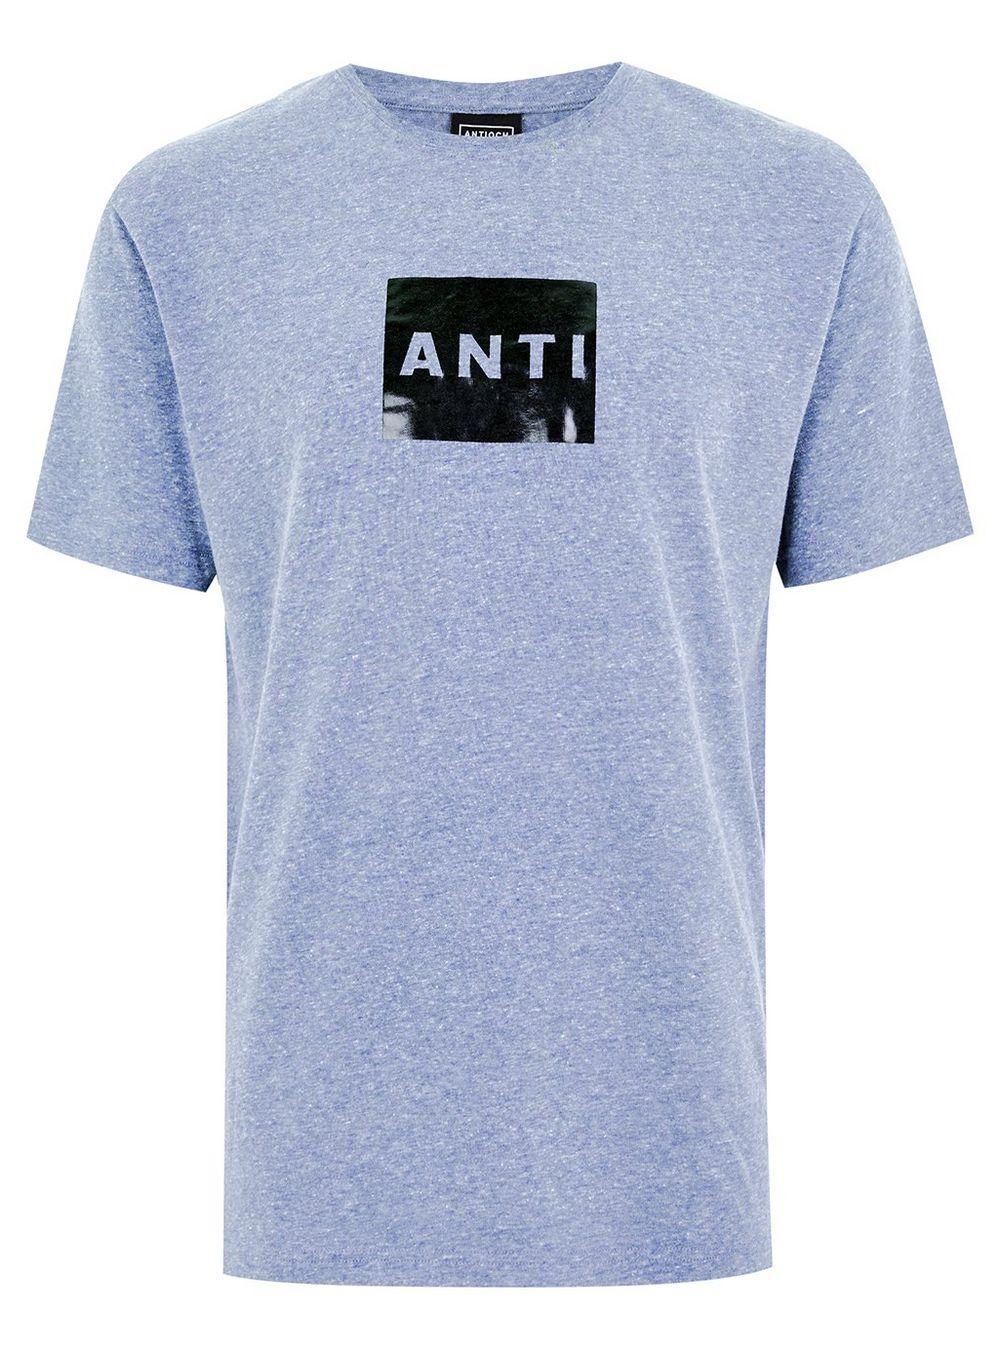 Blue Square Logo - ANTIOCH Blue Square Logo T Shirt*